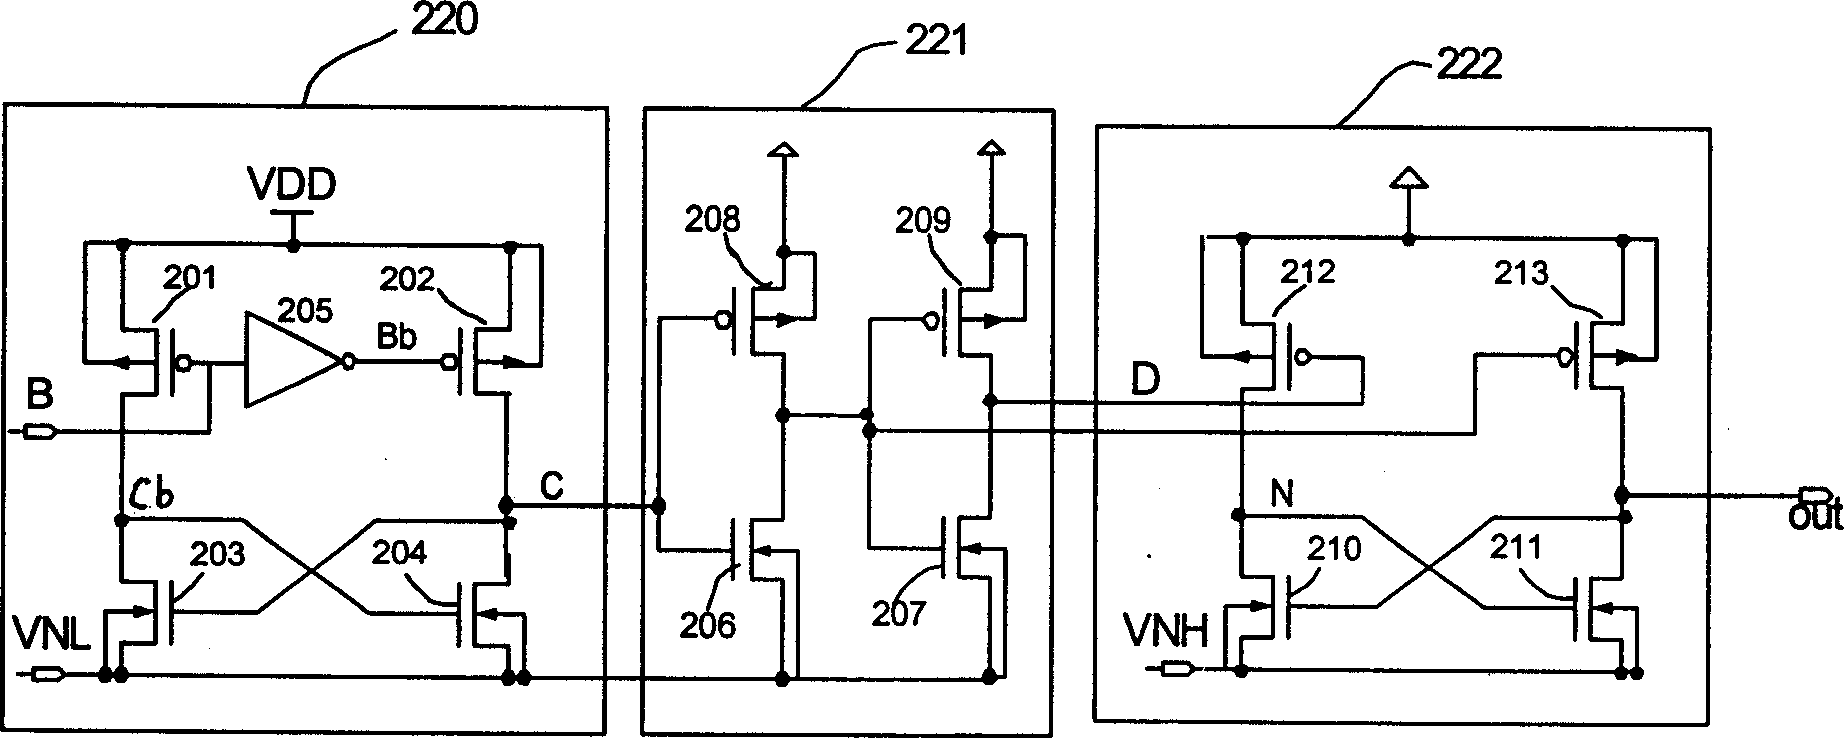 Negative voltage decoding circuit